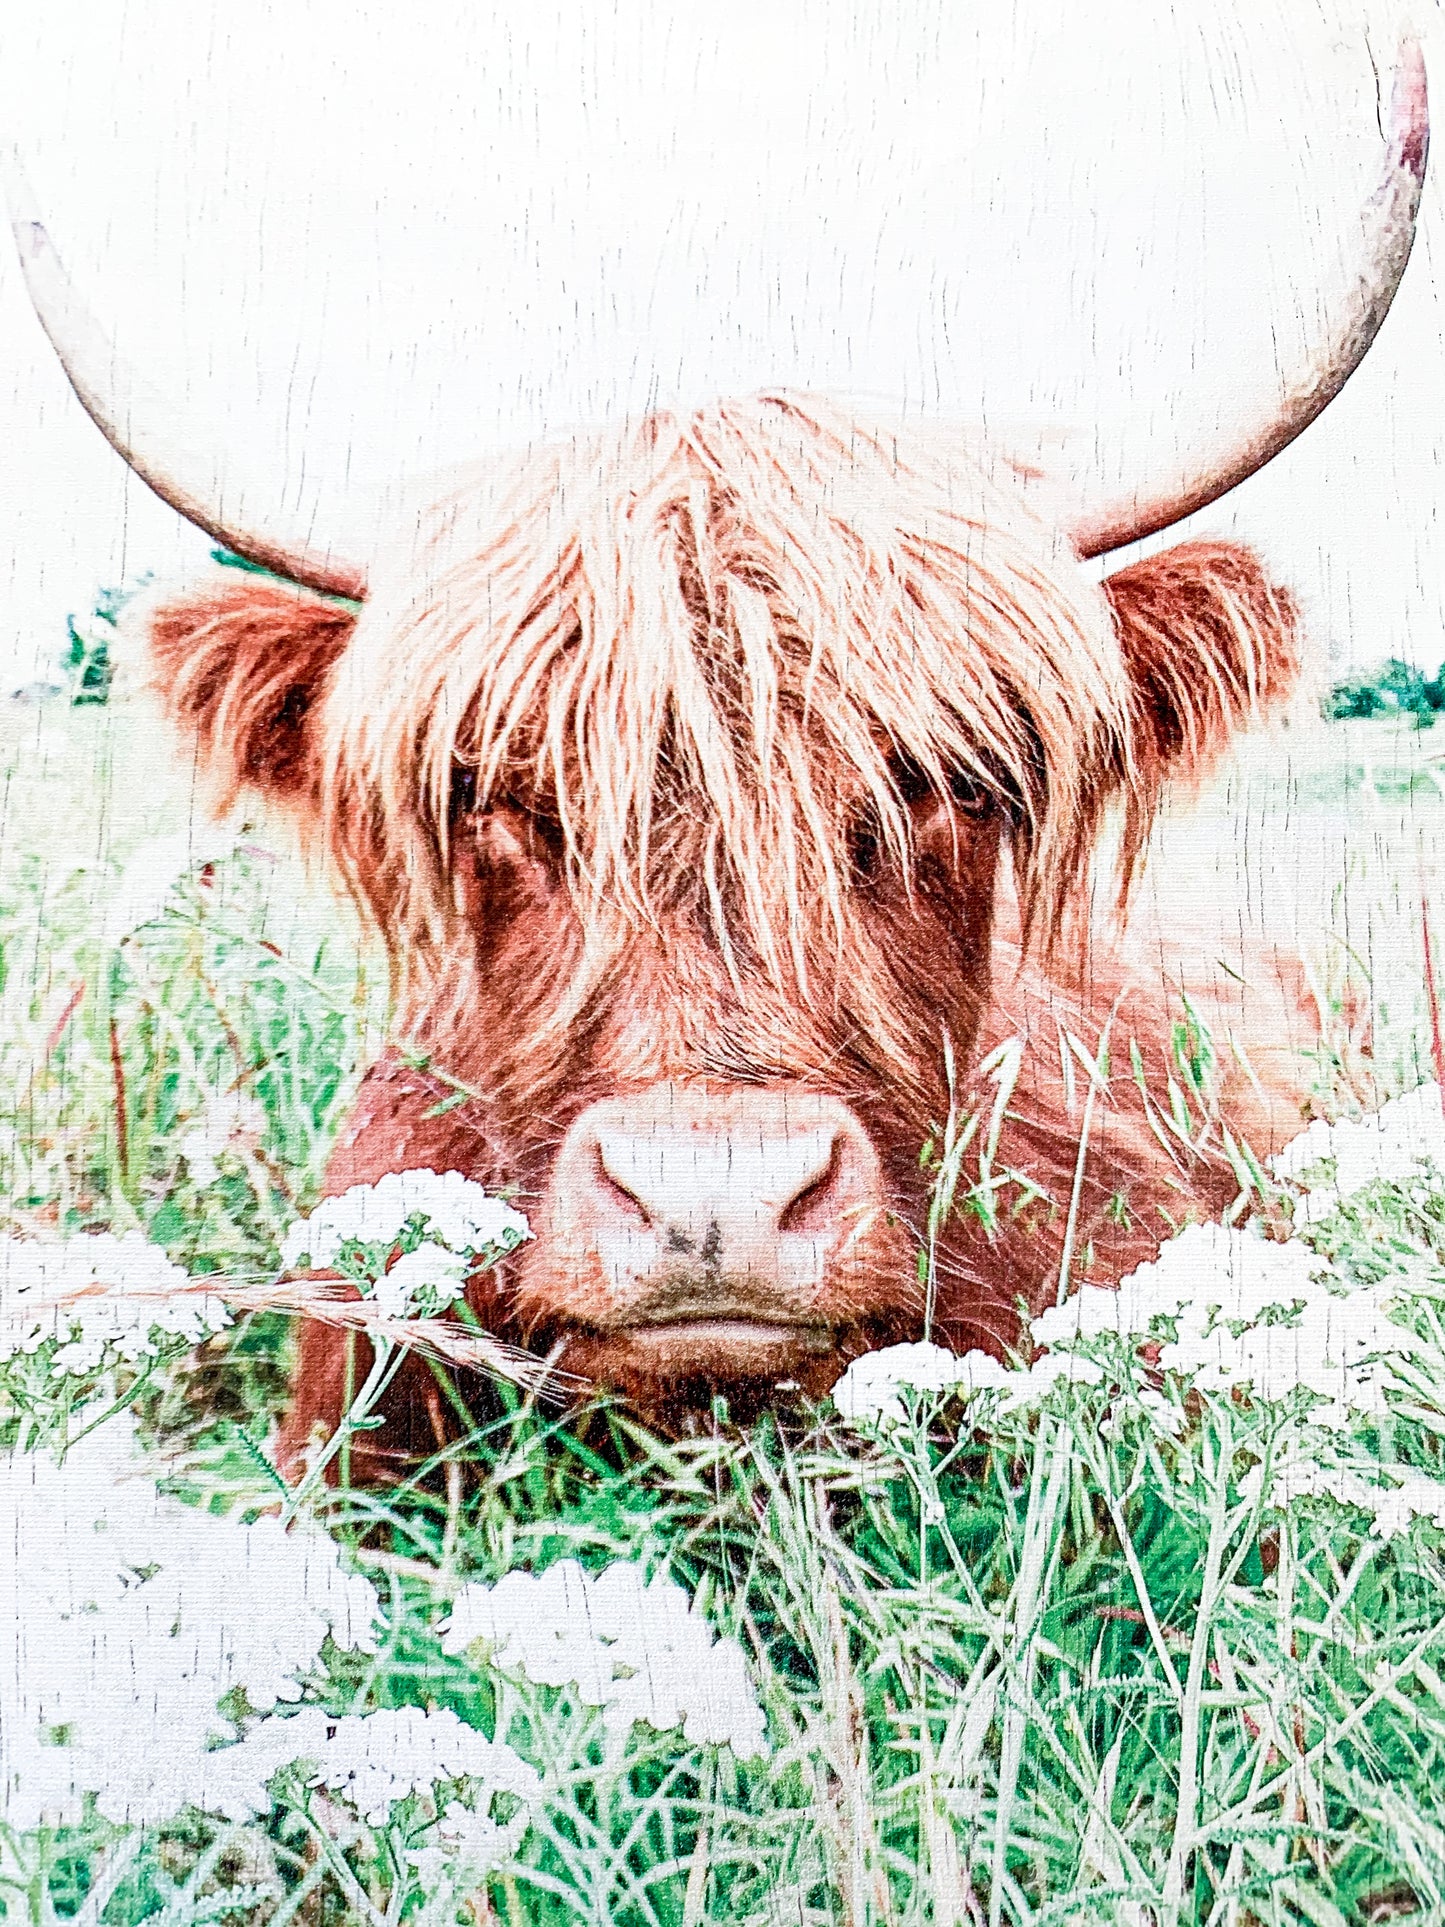 Highland Cow; Fluffy Cow Photo; Ruby; wood photo box